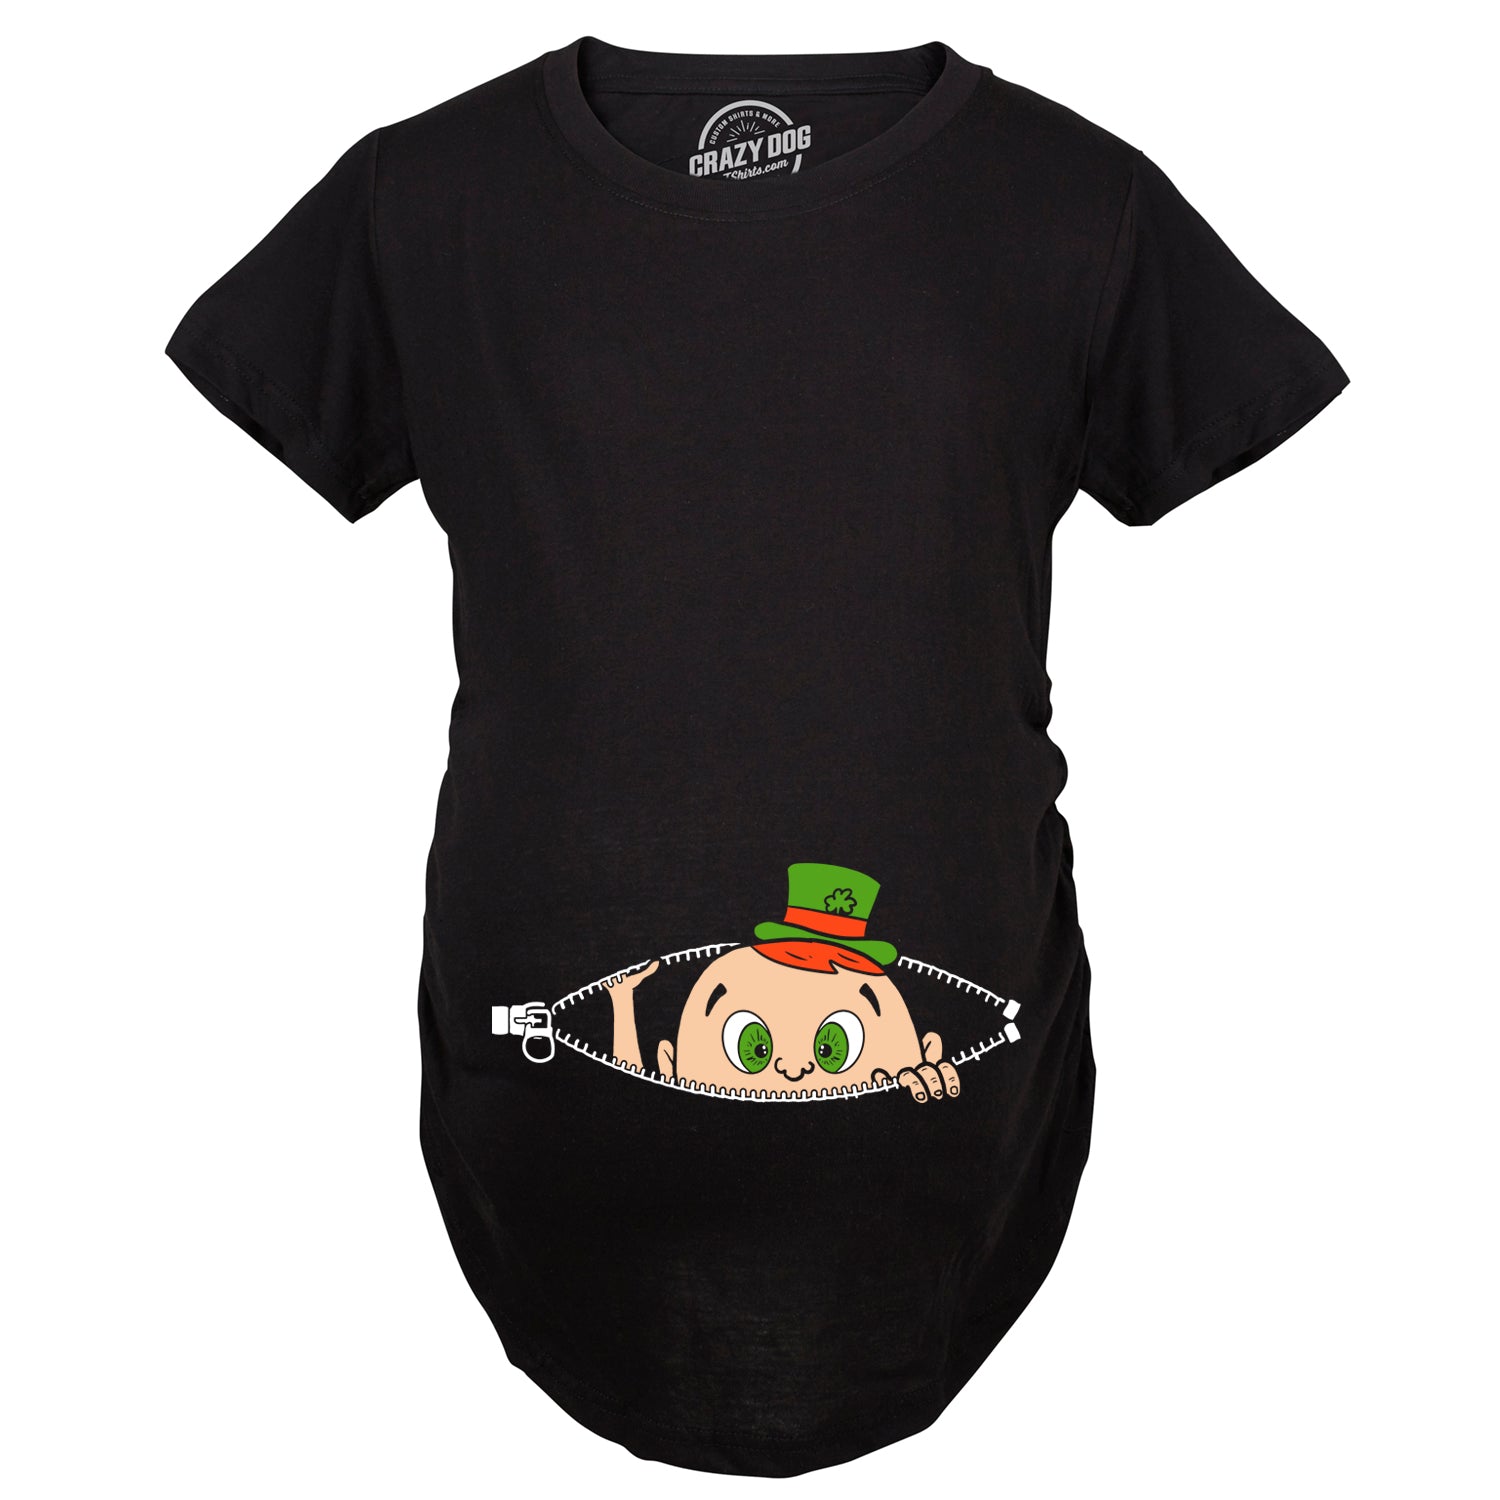 Funny Black Peeking St. Pattie's Day Baby Maternity T Shirt Nerdy Saint Patrick's Day Peeking Tee